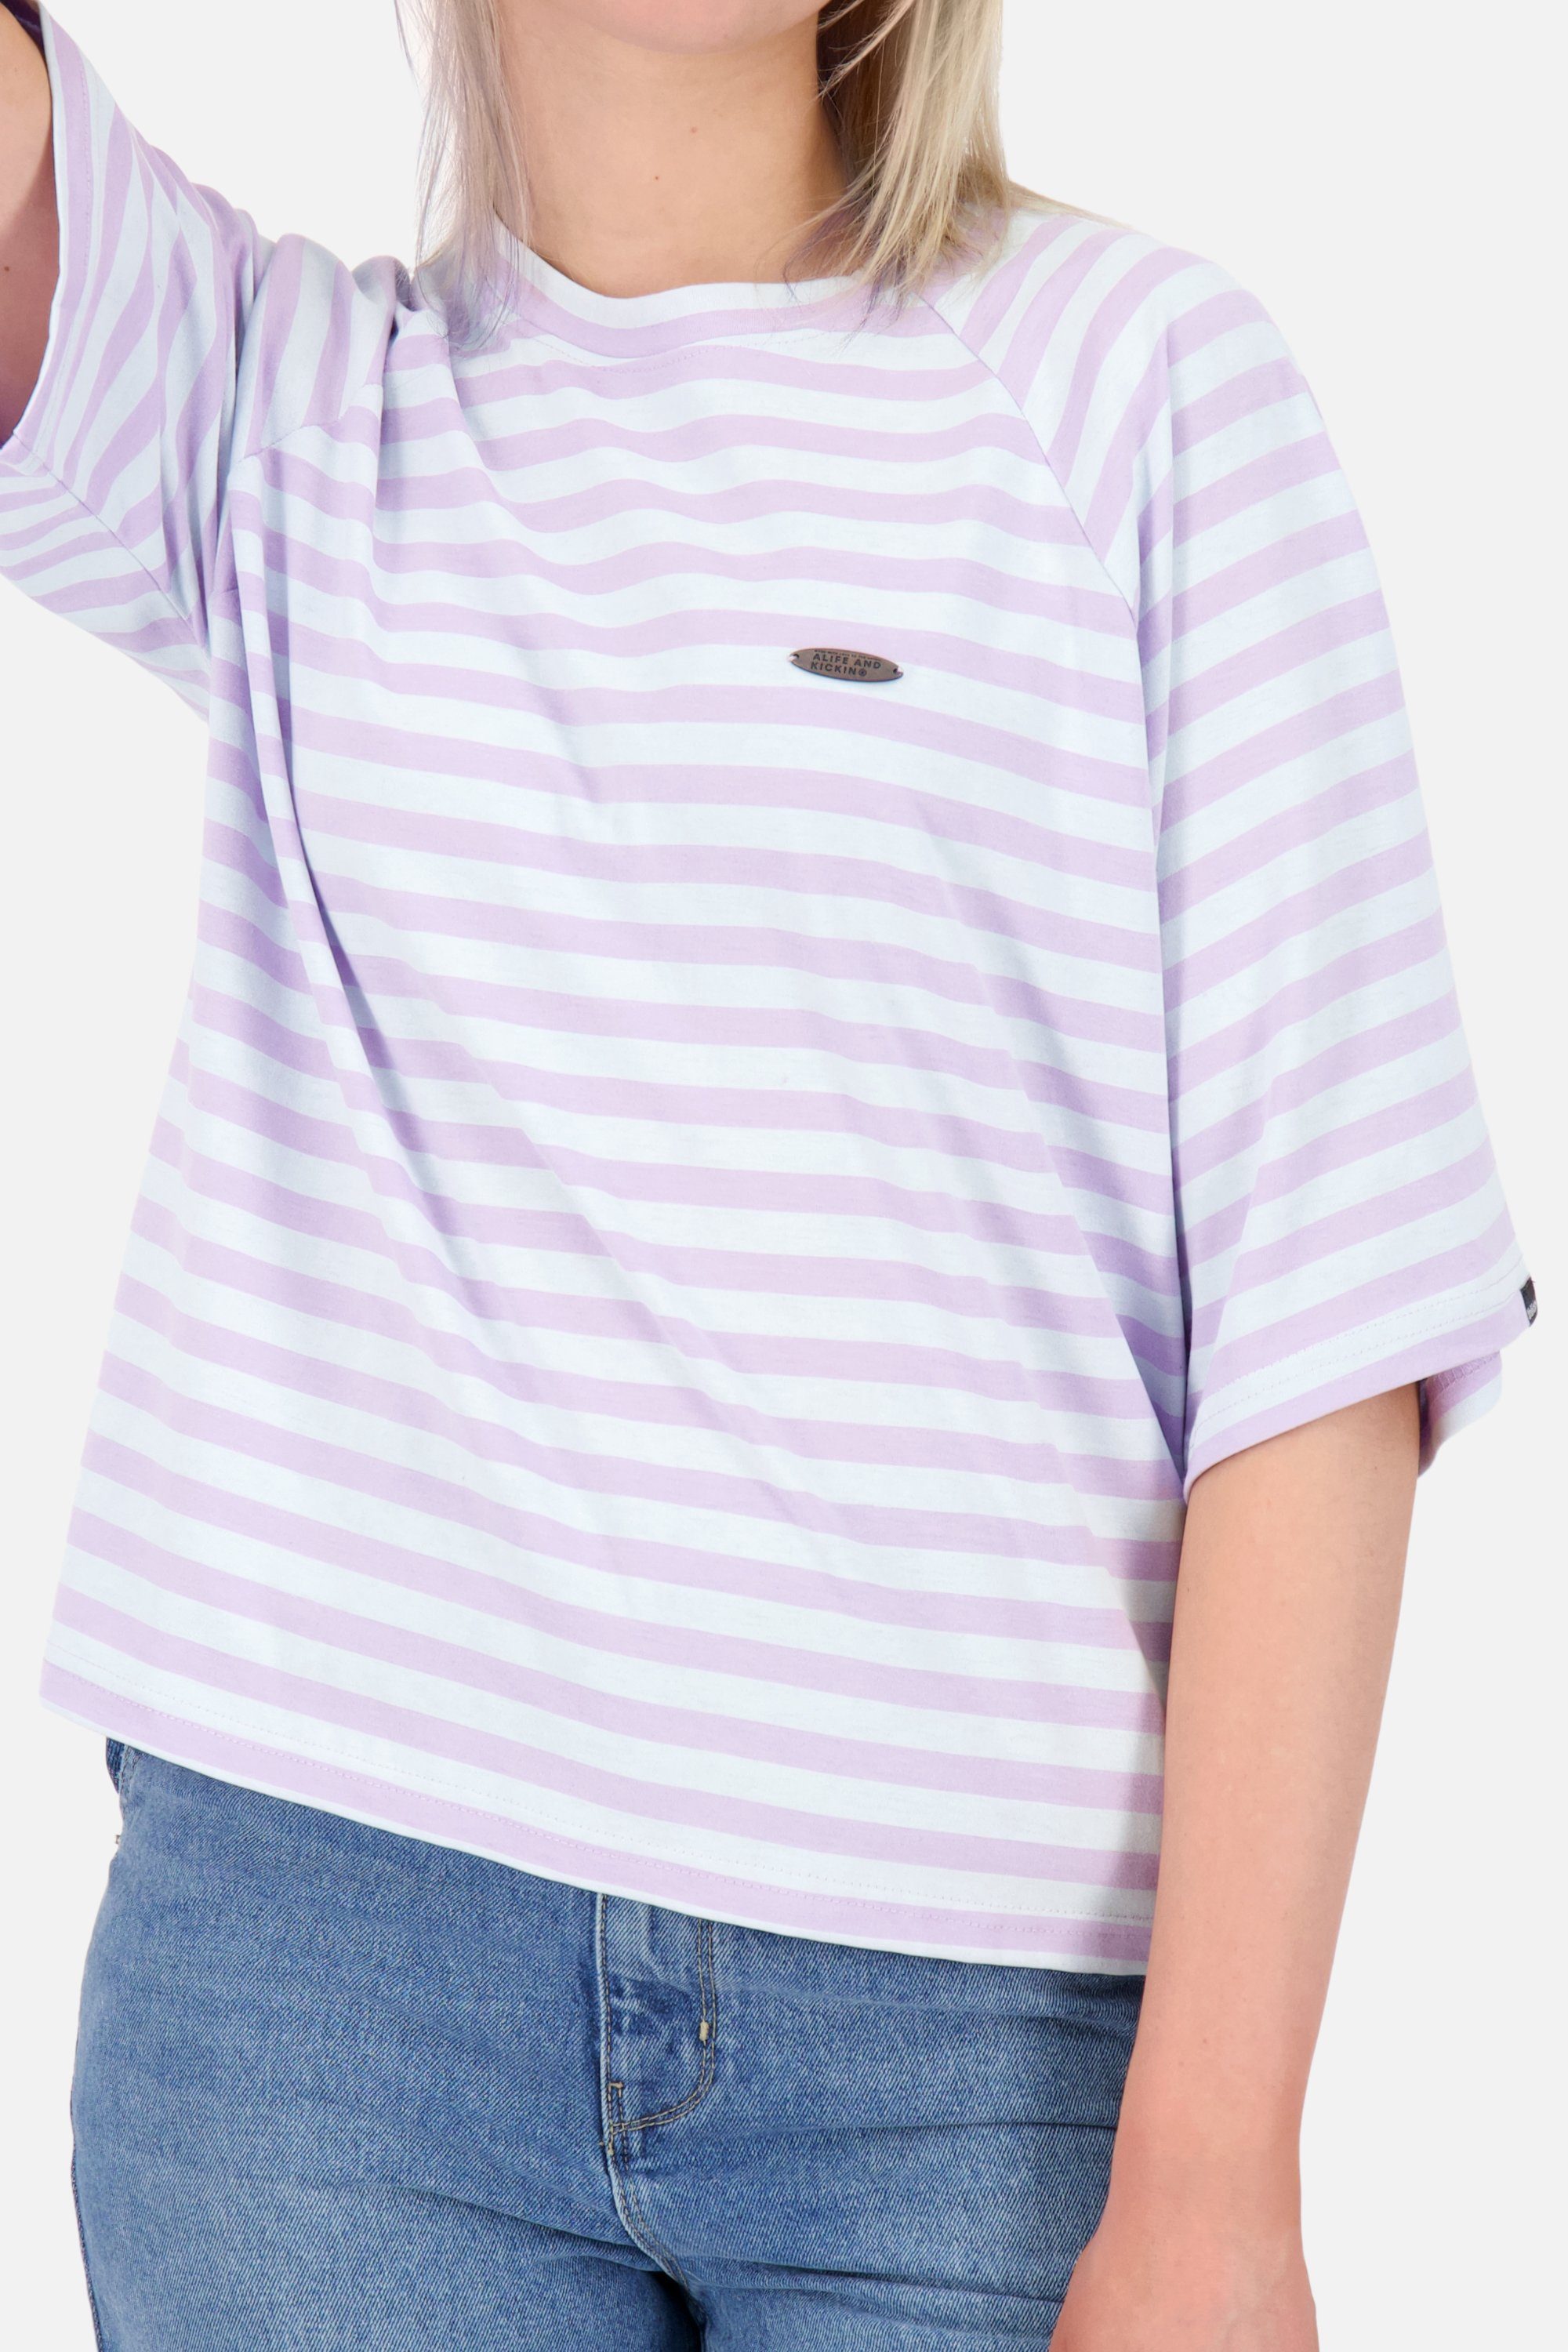 Alife & Shirt Z RubyAK Kickin digital Rundhalsshirt Damen Shirt lavender Kurzarmshirt